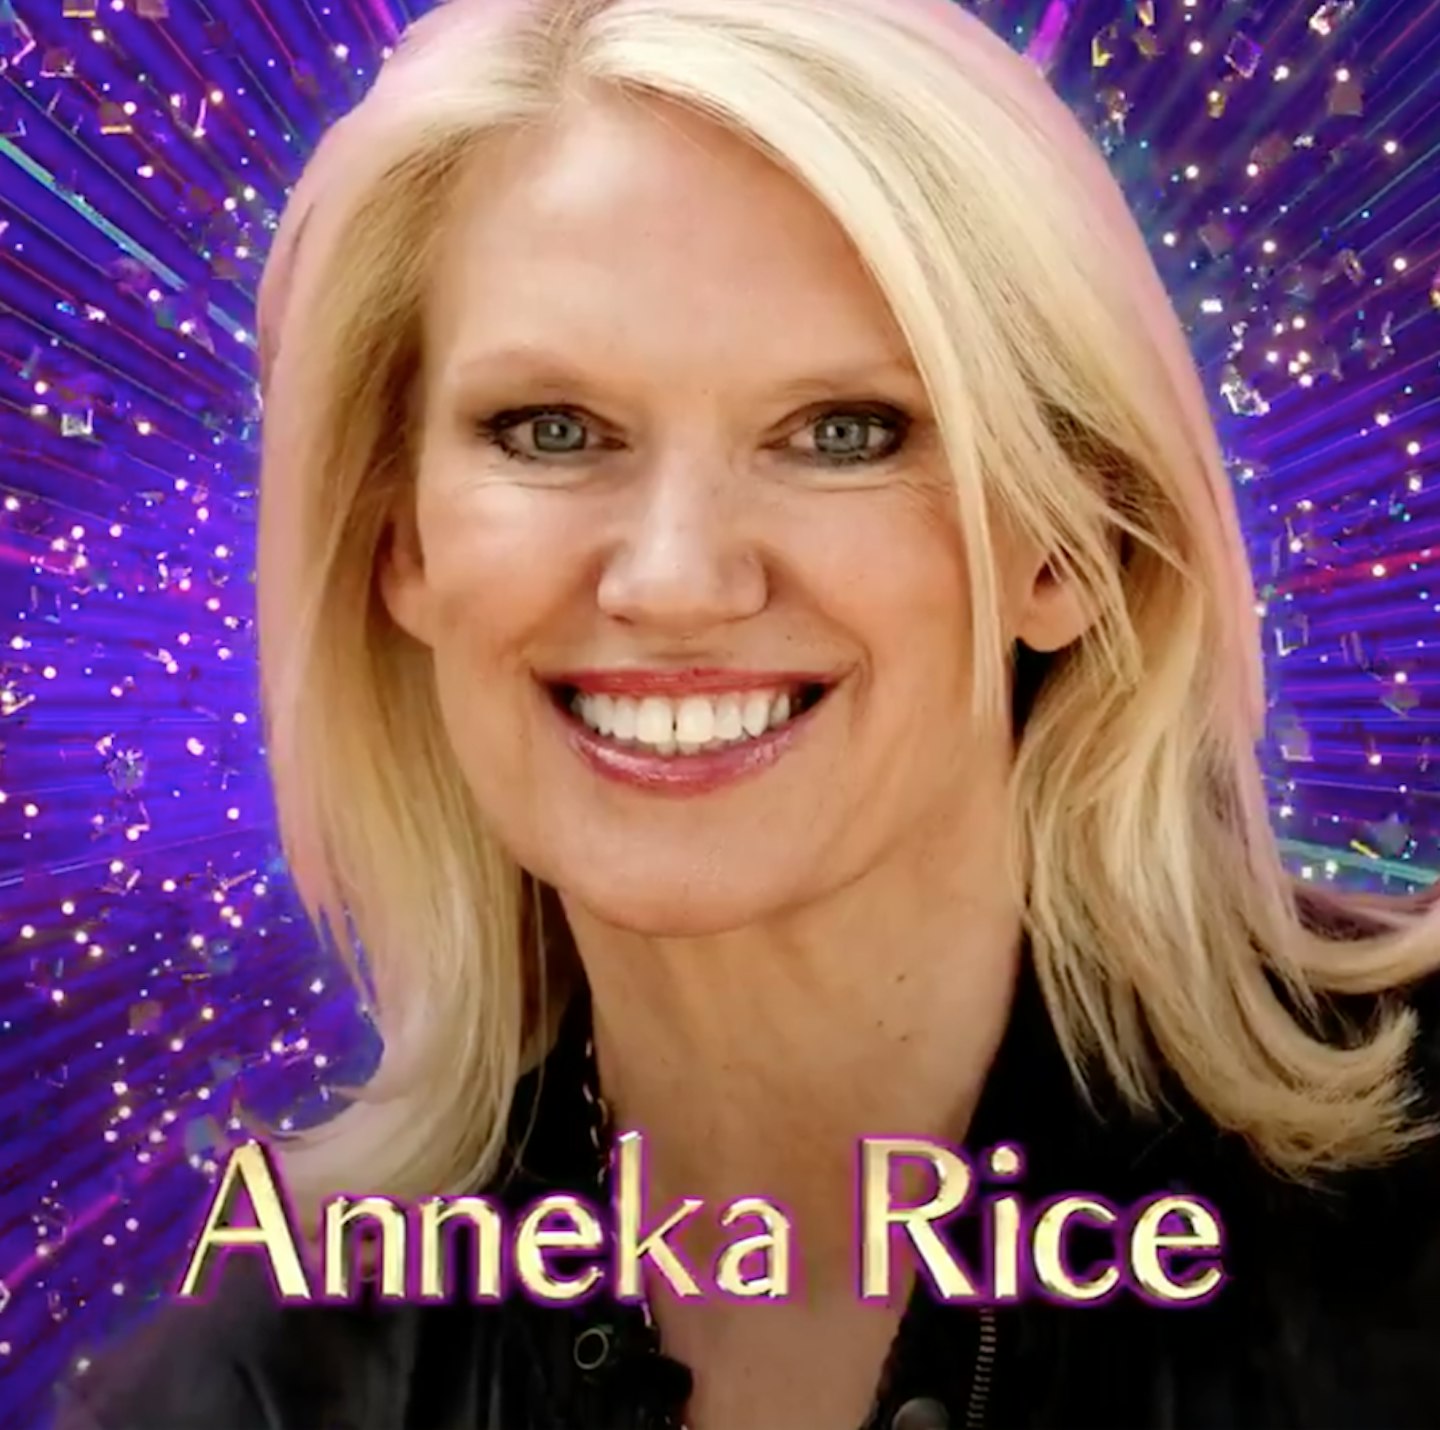 Anneka Rice